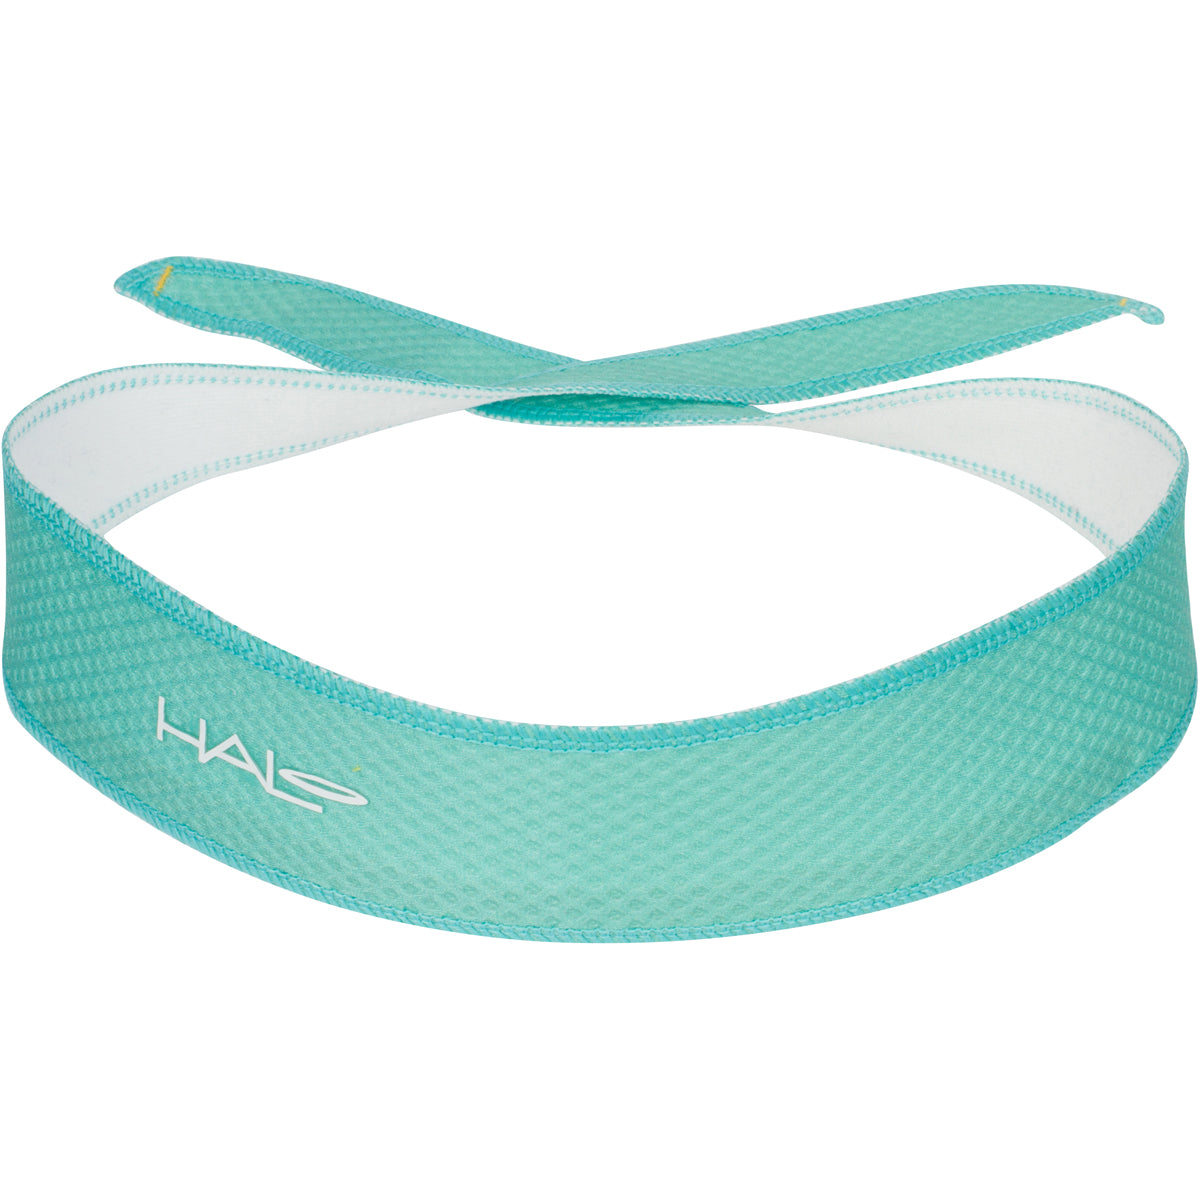 Halo I Headband AIR Series - tie version